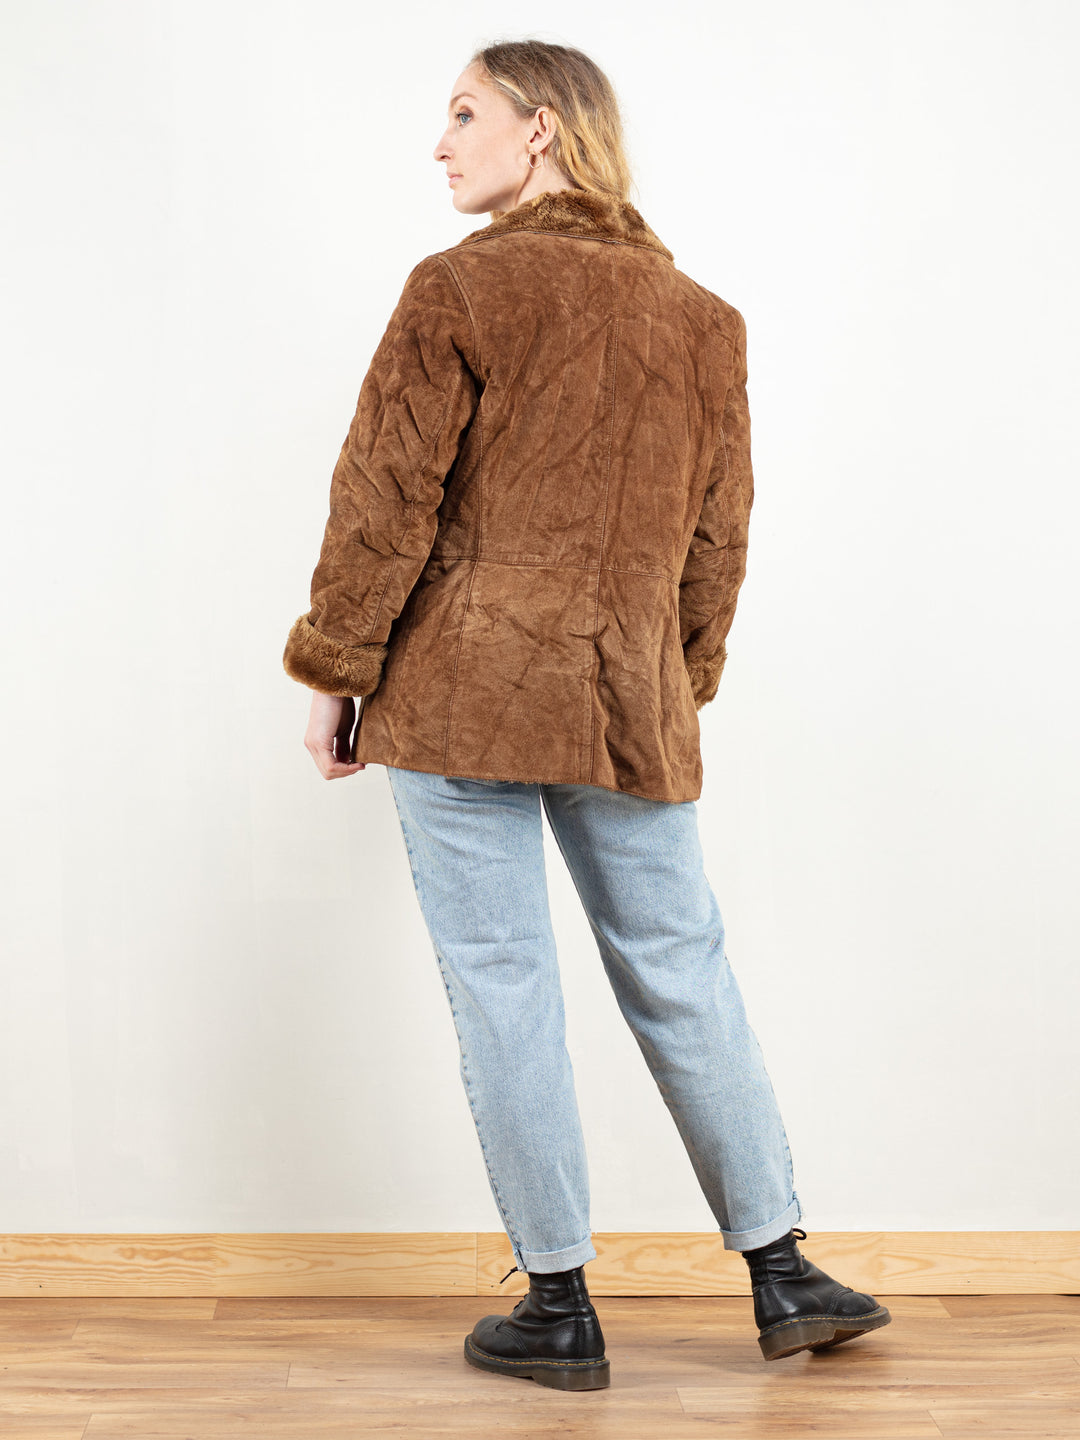 Brown Sherpa Jacket vintage 70s women suede winter outerwear sheepskin retro coat 70s vintage clothing size medium